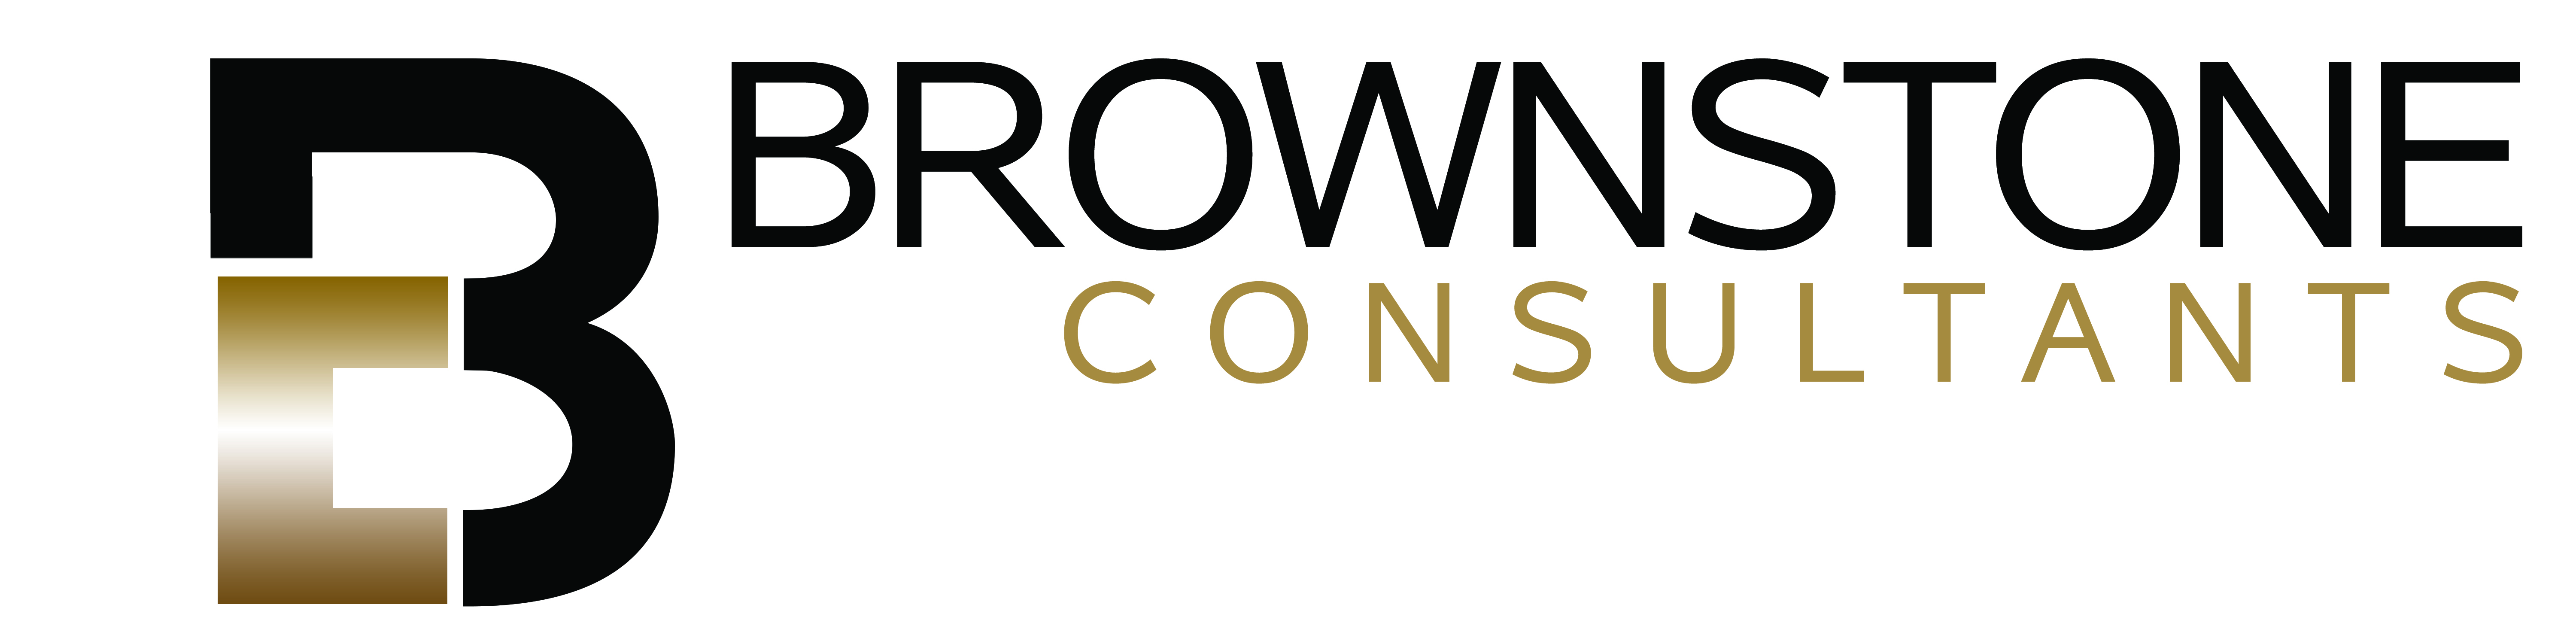 brownstone consultants